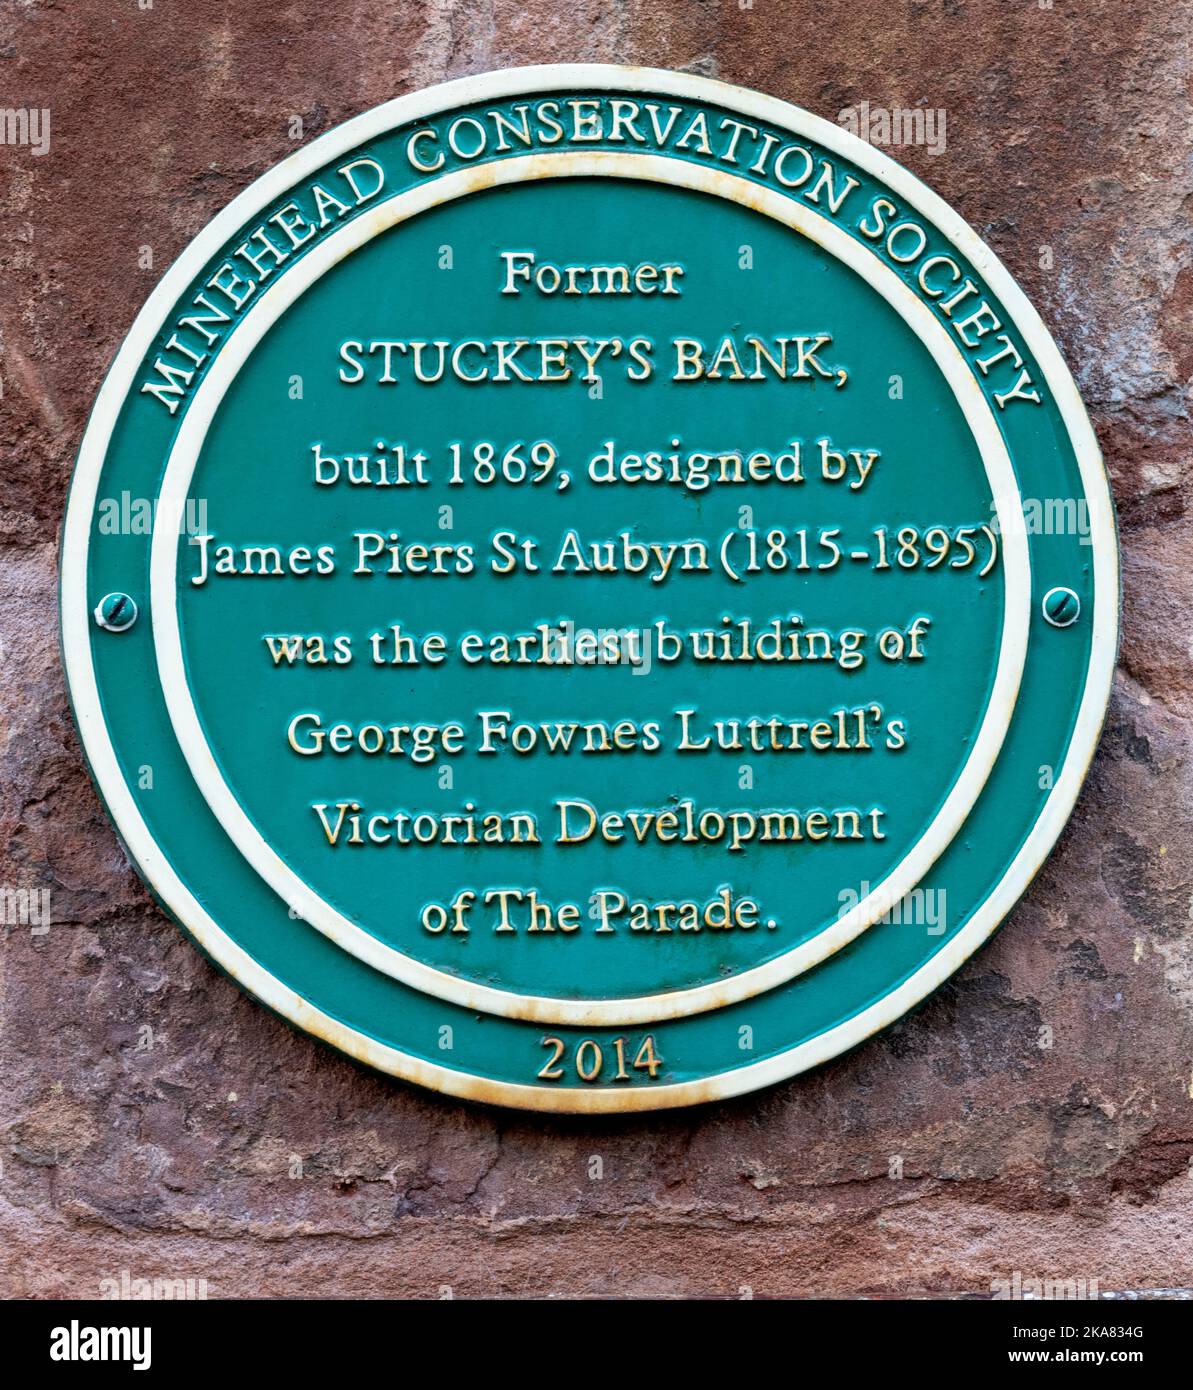 Green heritage plaque of Minehead Conservation Society at the former Stuckey's Bank, The Parade, Minehead, Somerset, England, UK Stock Photo